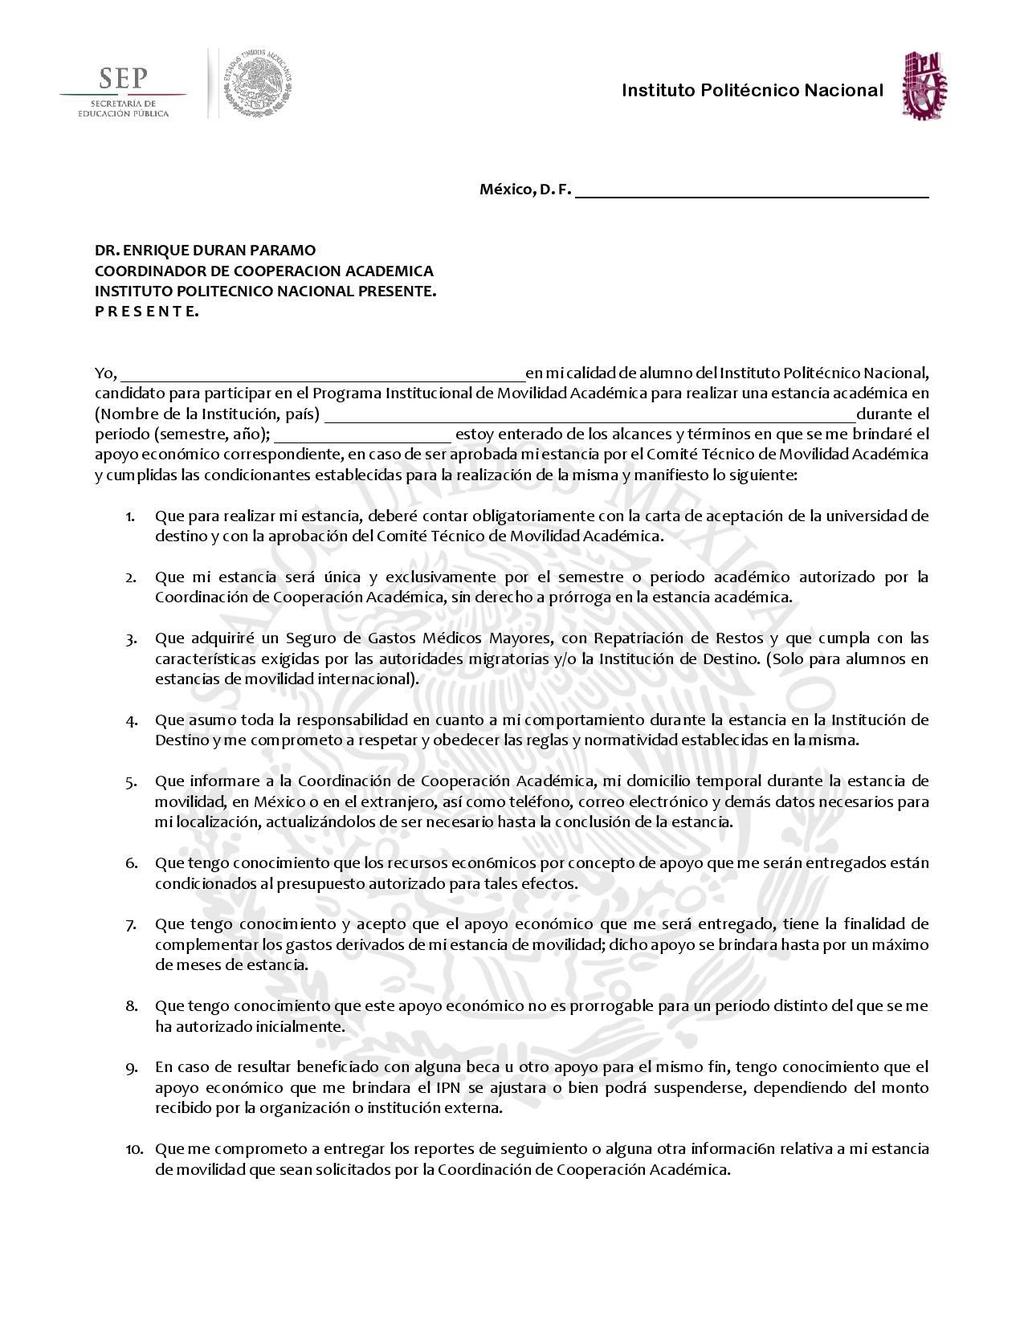 FORMATO CCA05 Carta compromiso del alumn@, http://www.cca.ipn.